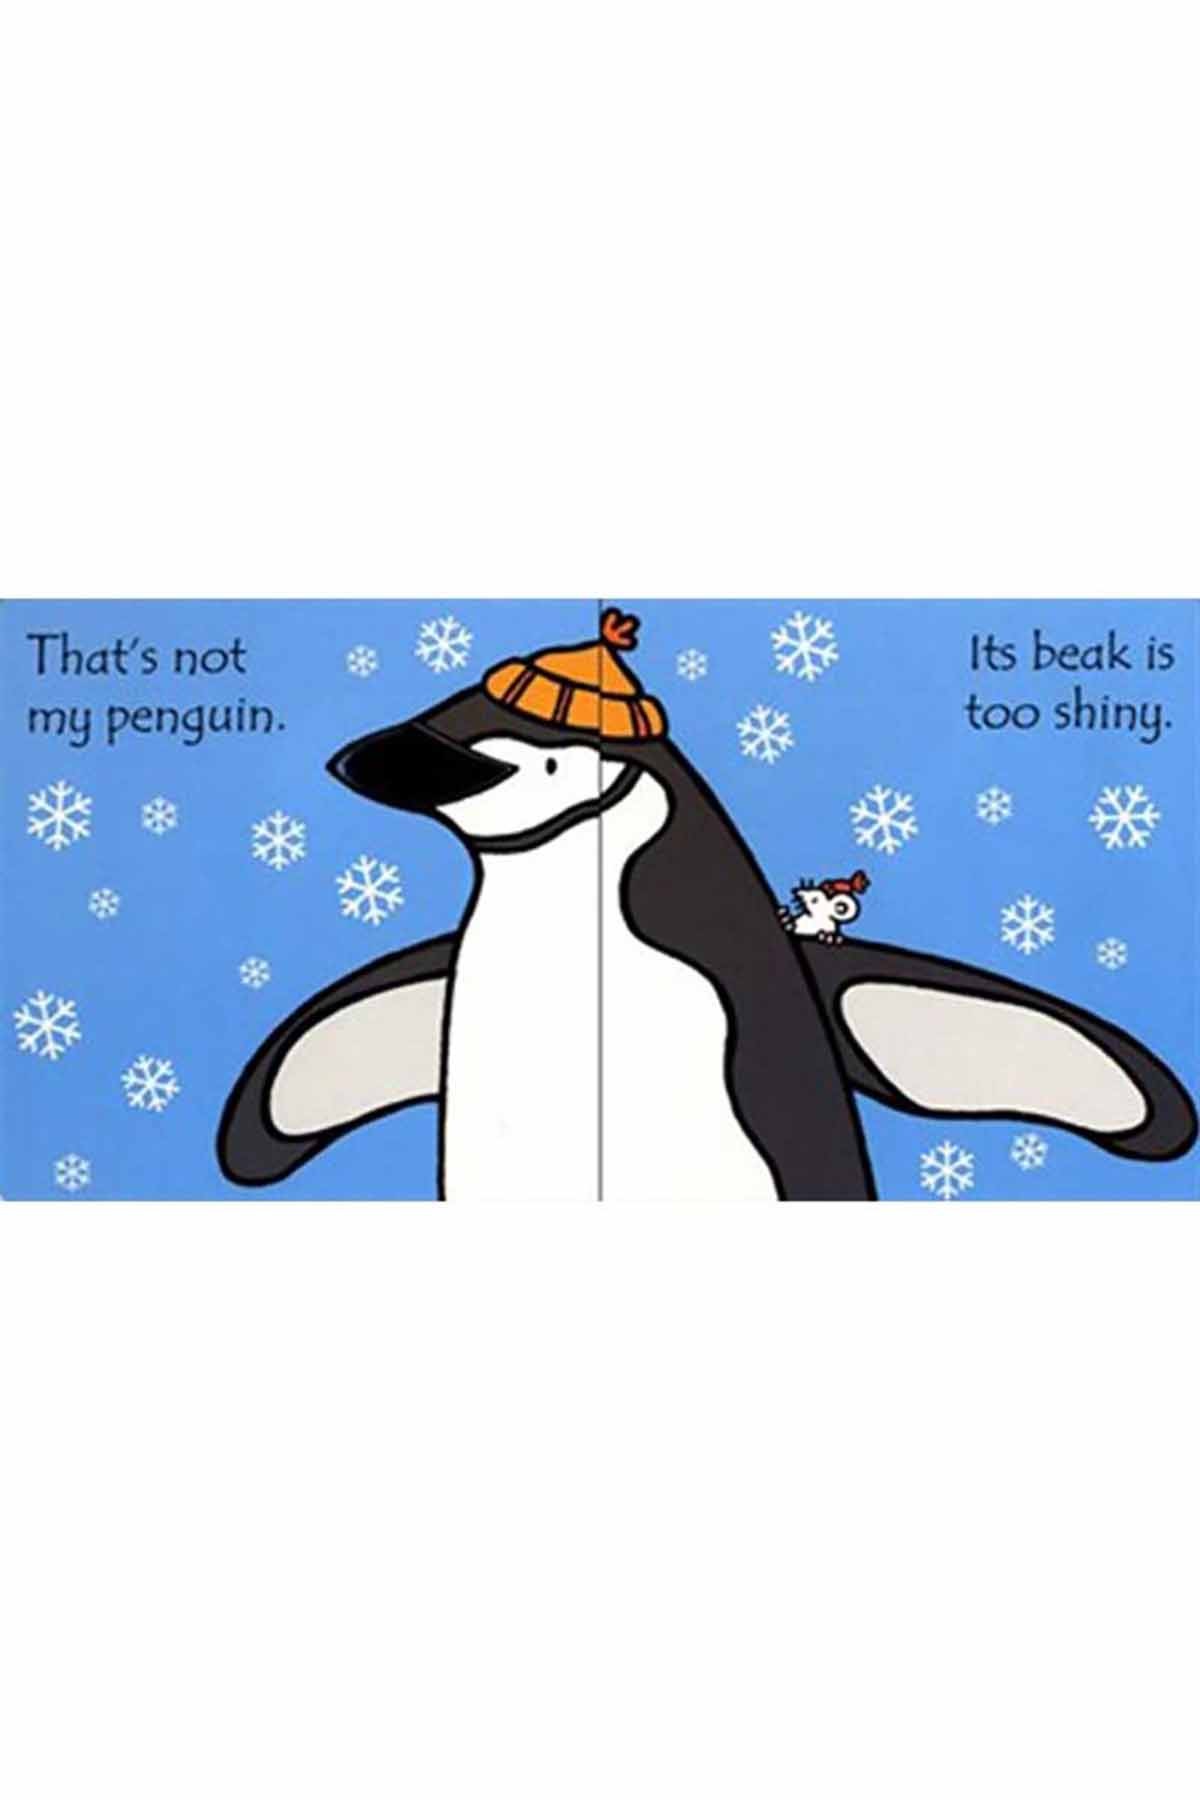 The Usborne That's not My Penguin